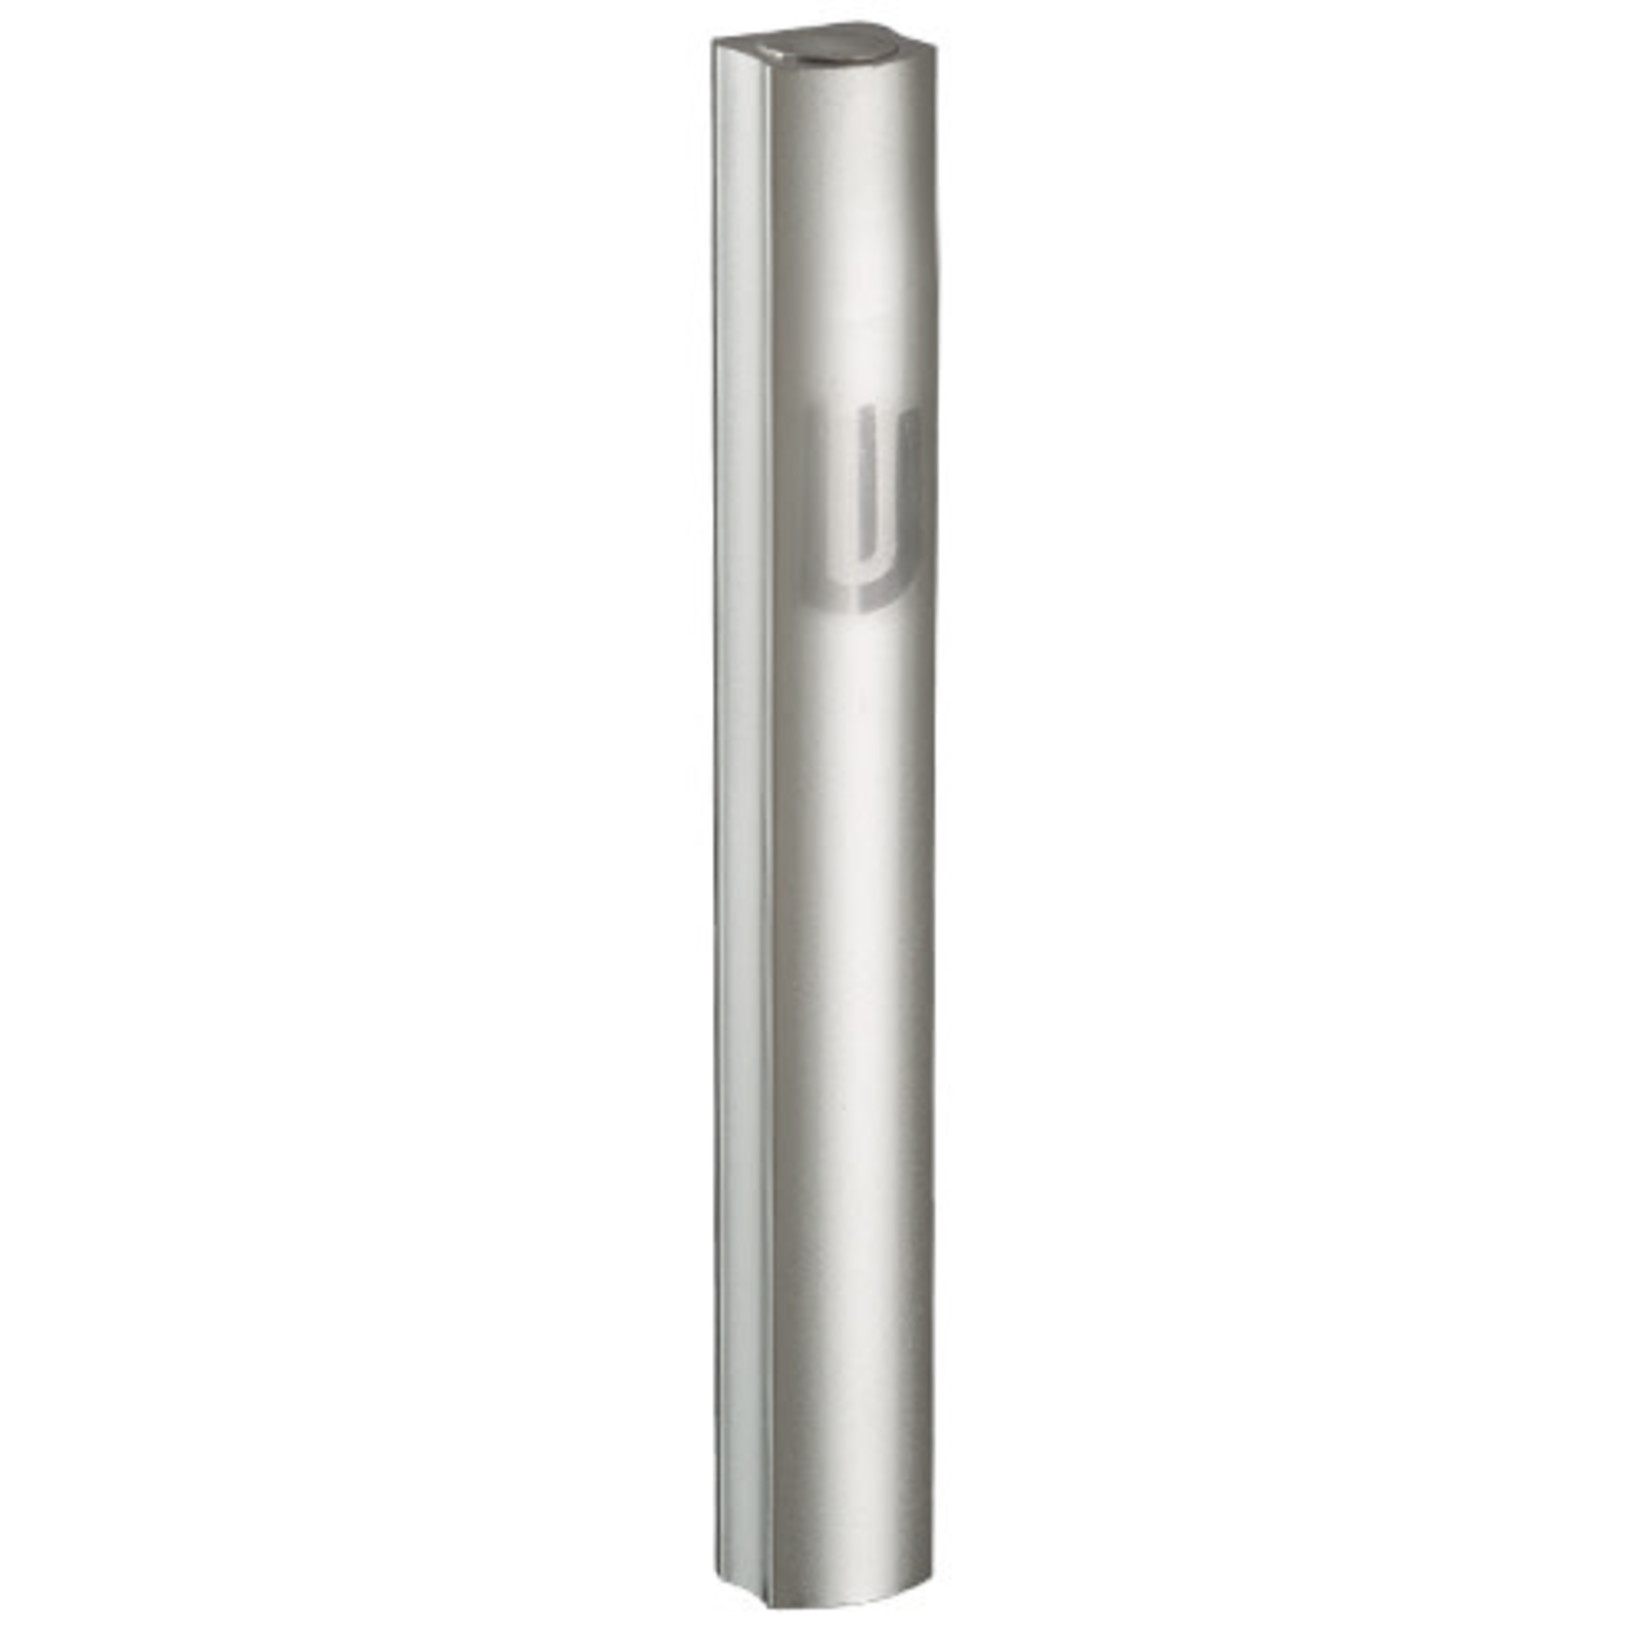 Aluminum Mezuzah 10cm-Dotted Design in Silver